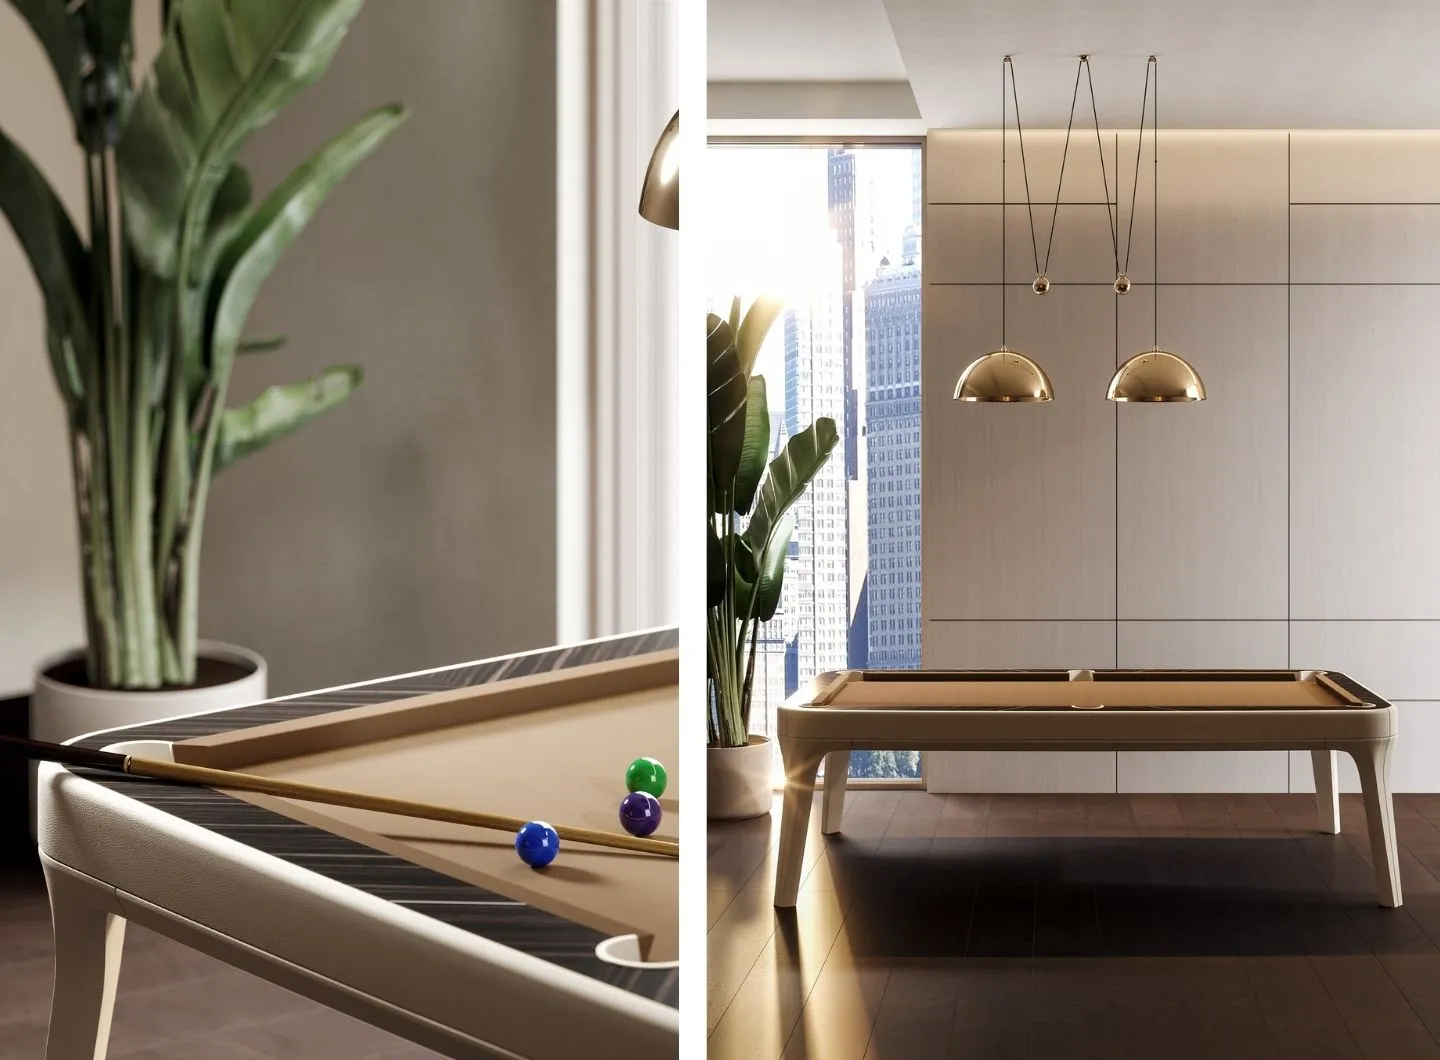 Vismara Design - Dandy Modern Pool Table